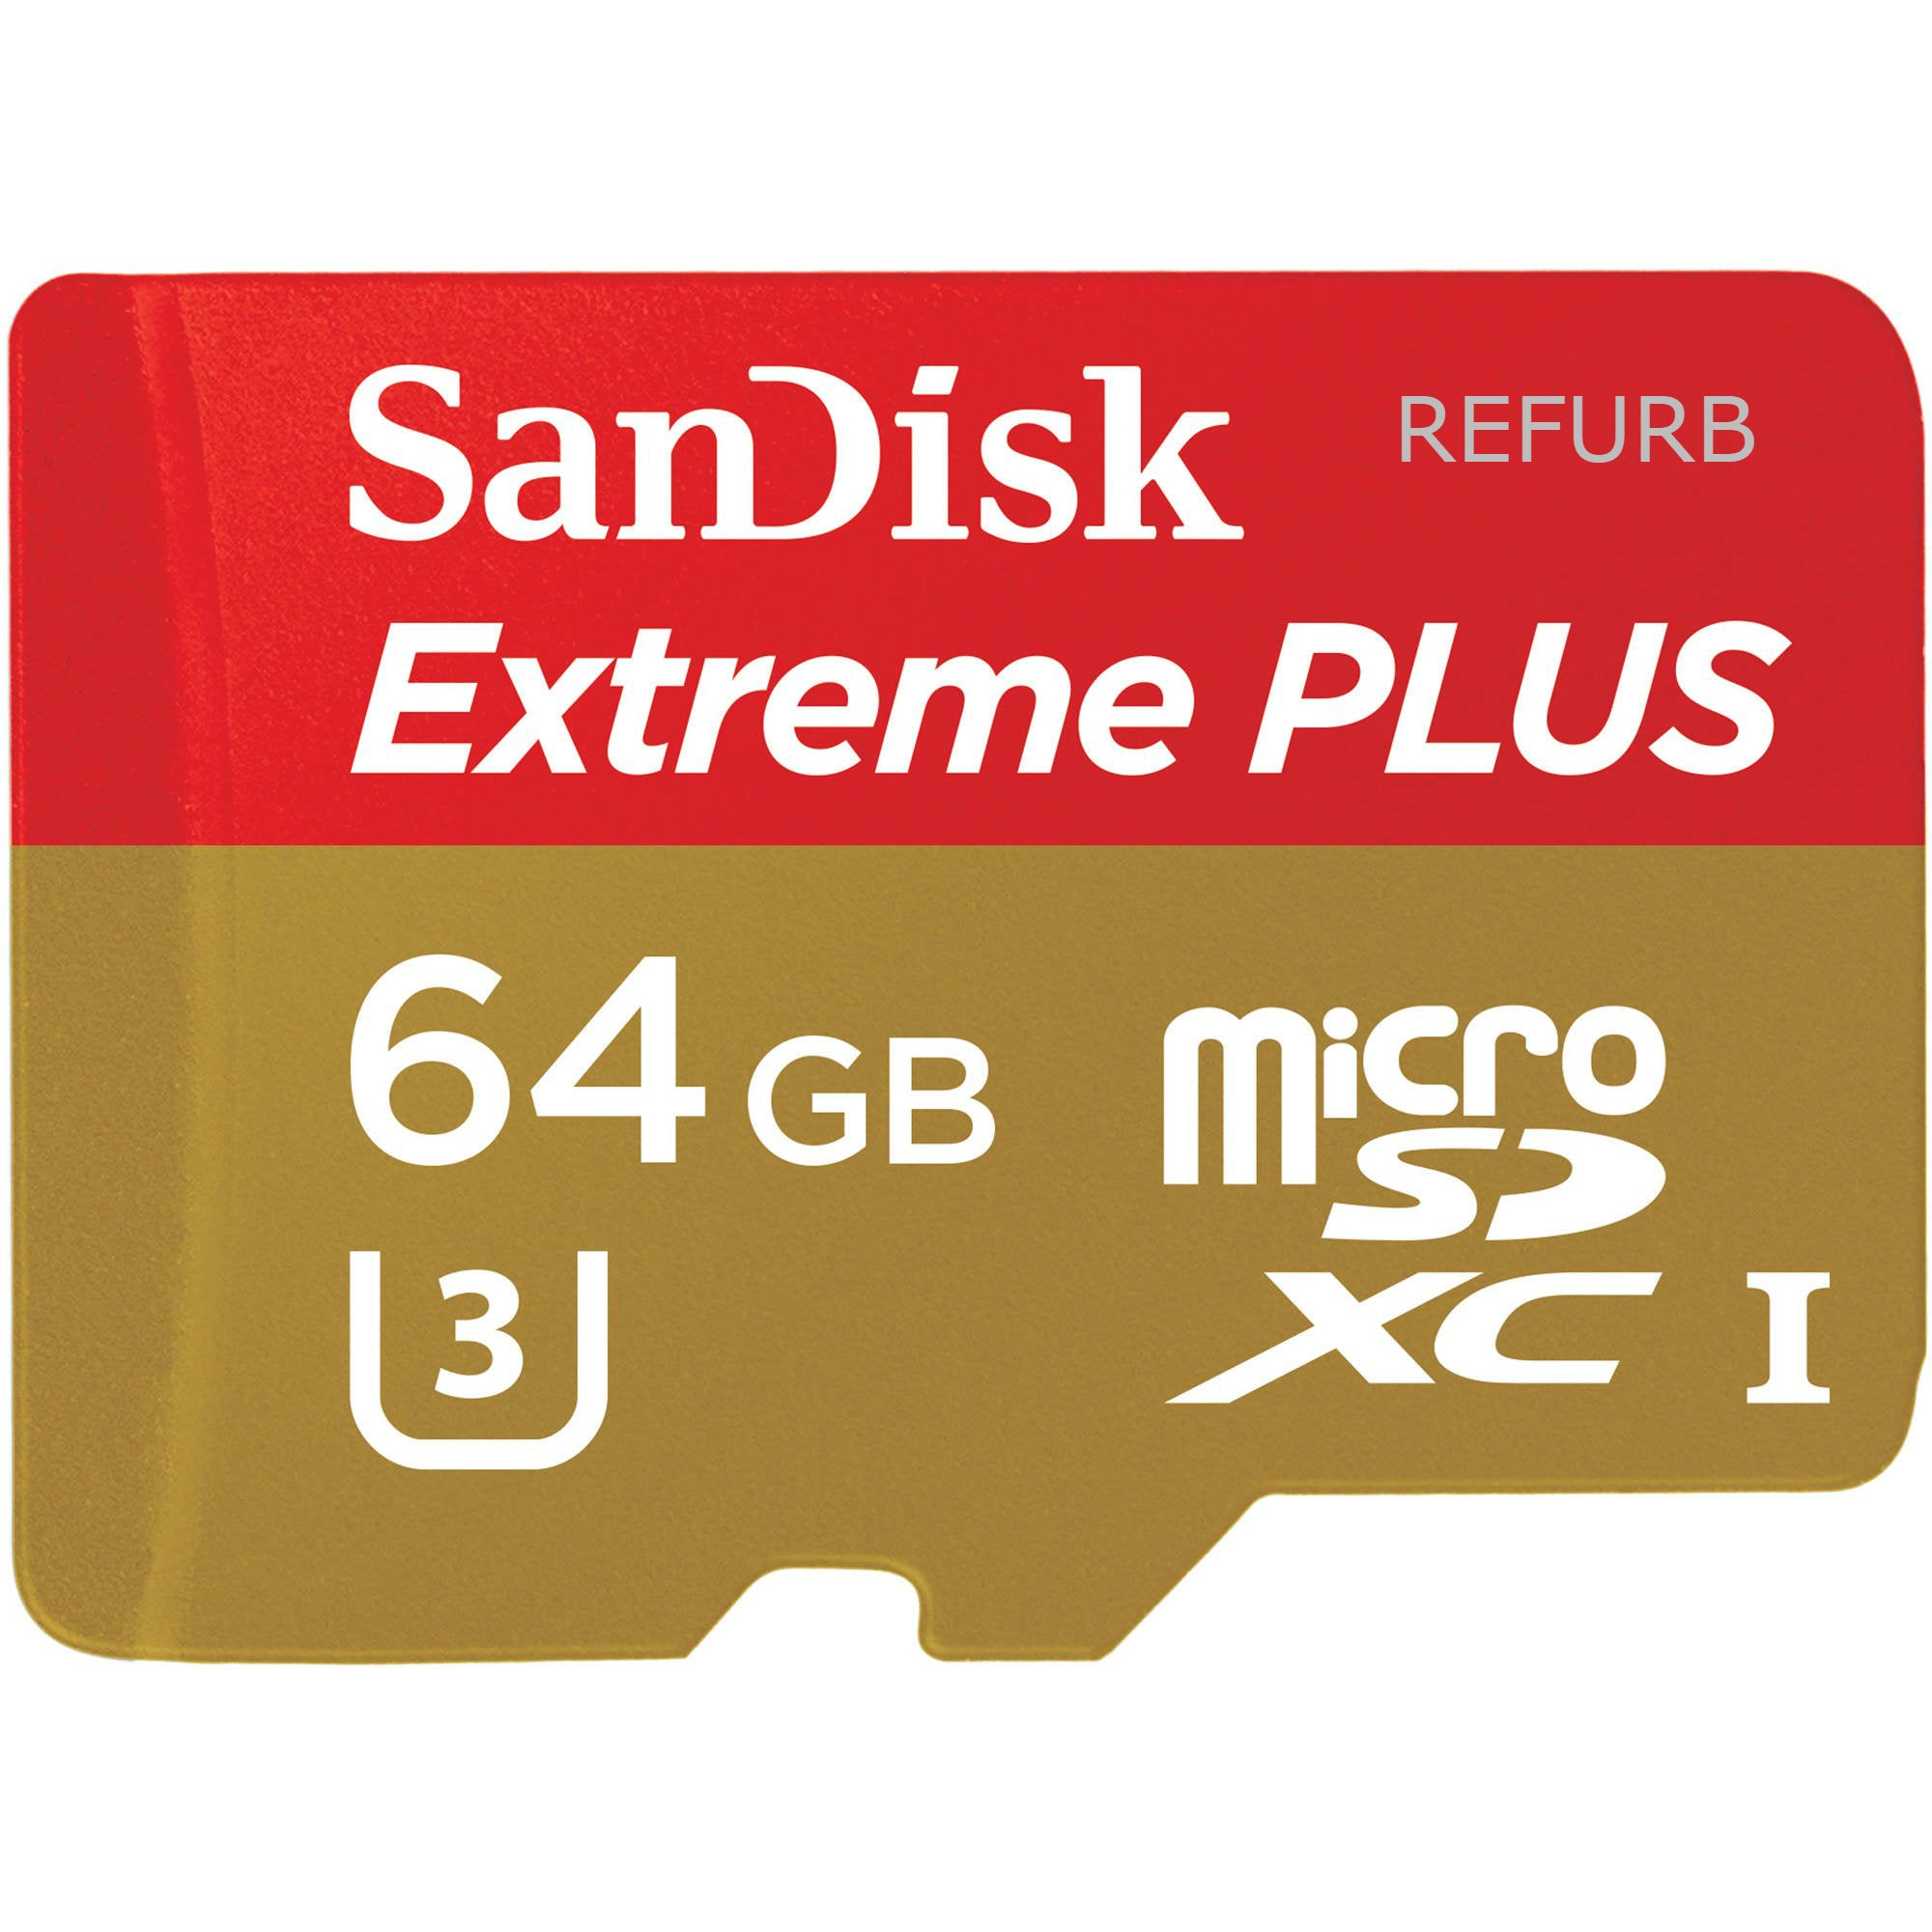 Sandisk Extreme Plus 64GB MicroSDXC Flash Memory Card  UHS-I Gold/Red SDSQXSG-064G-ANCMA (Certified Refurbished)